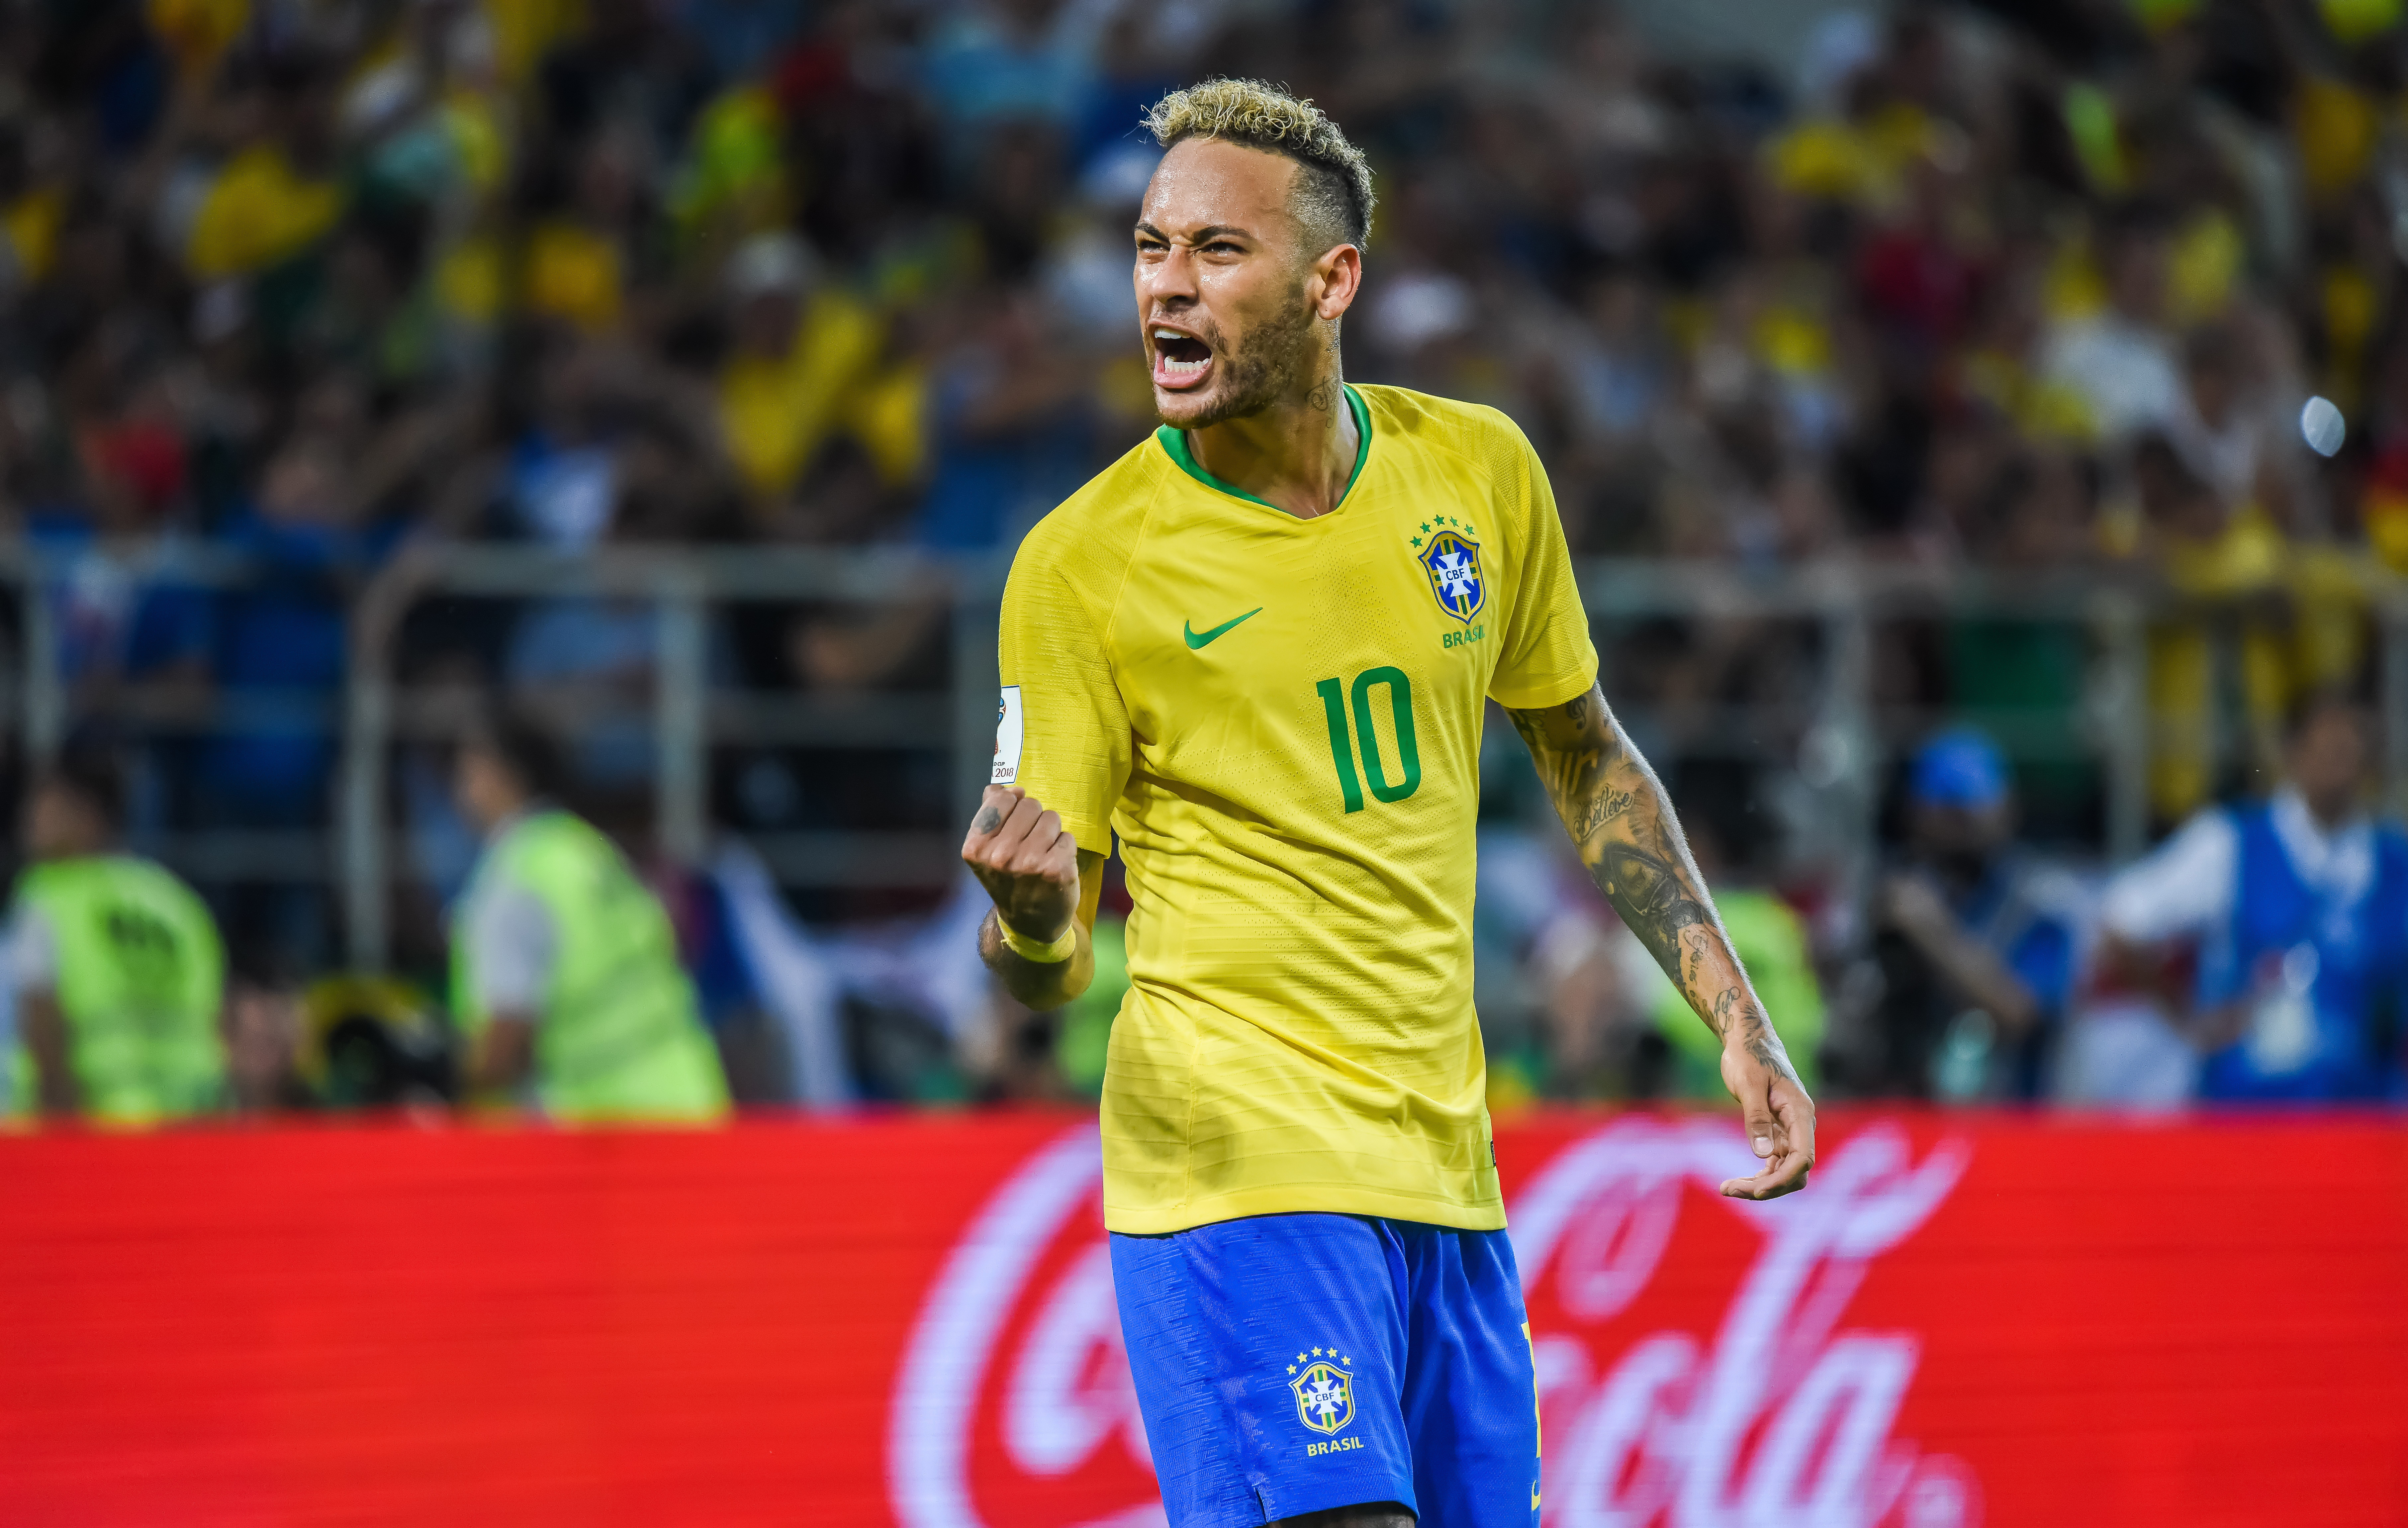 new neymar cleats 2019